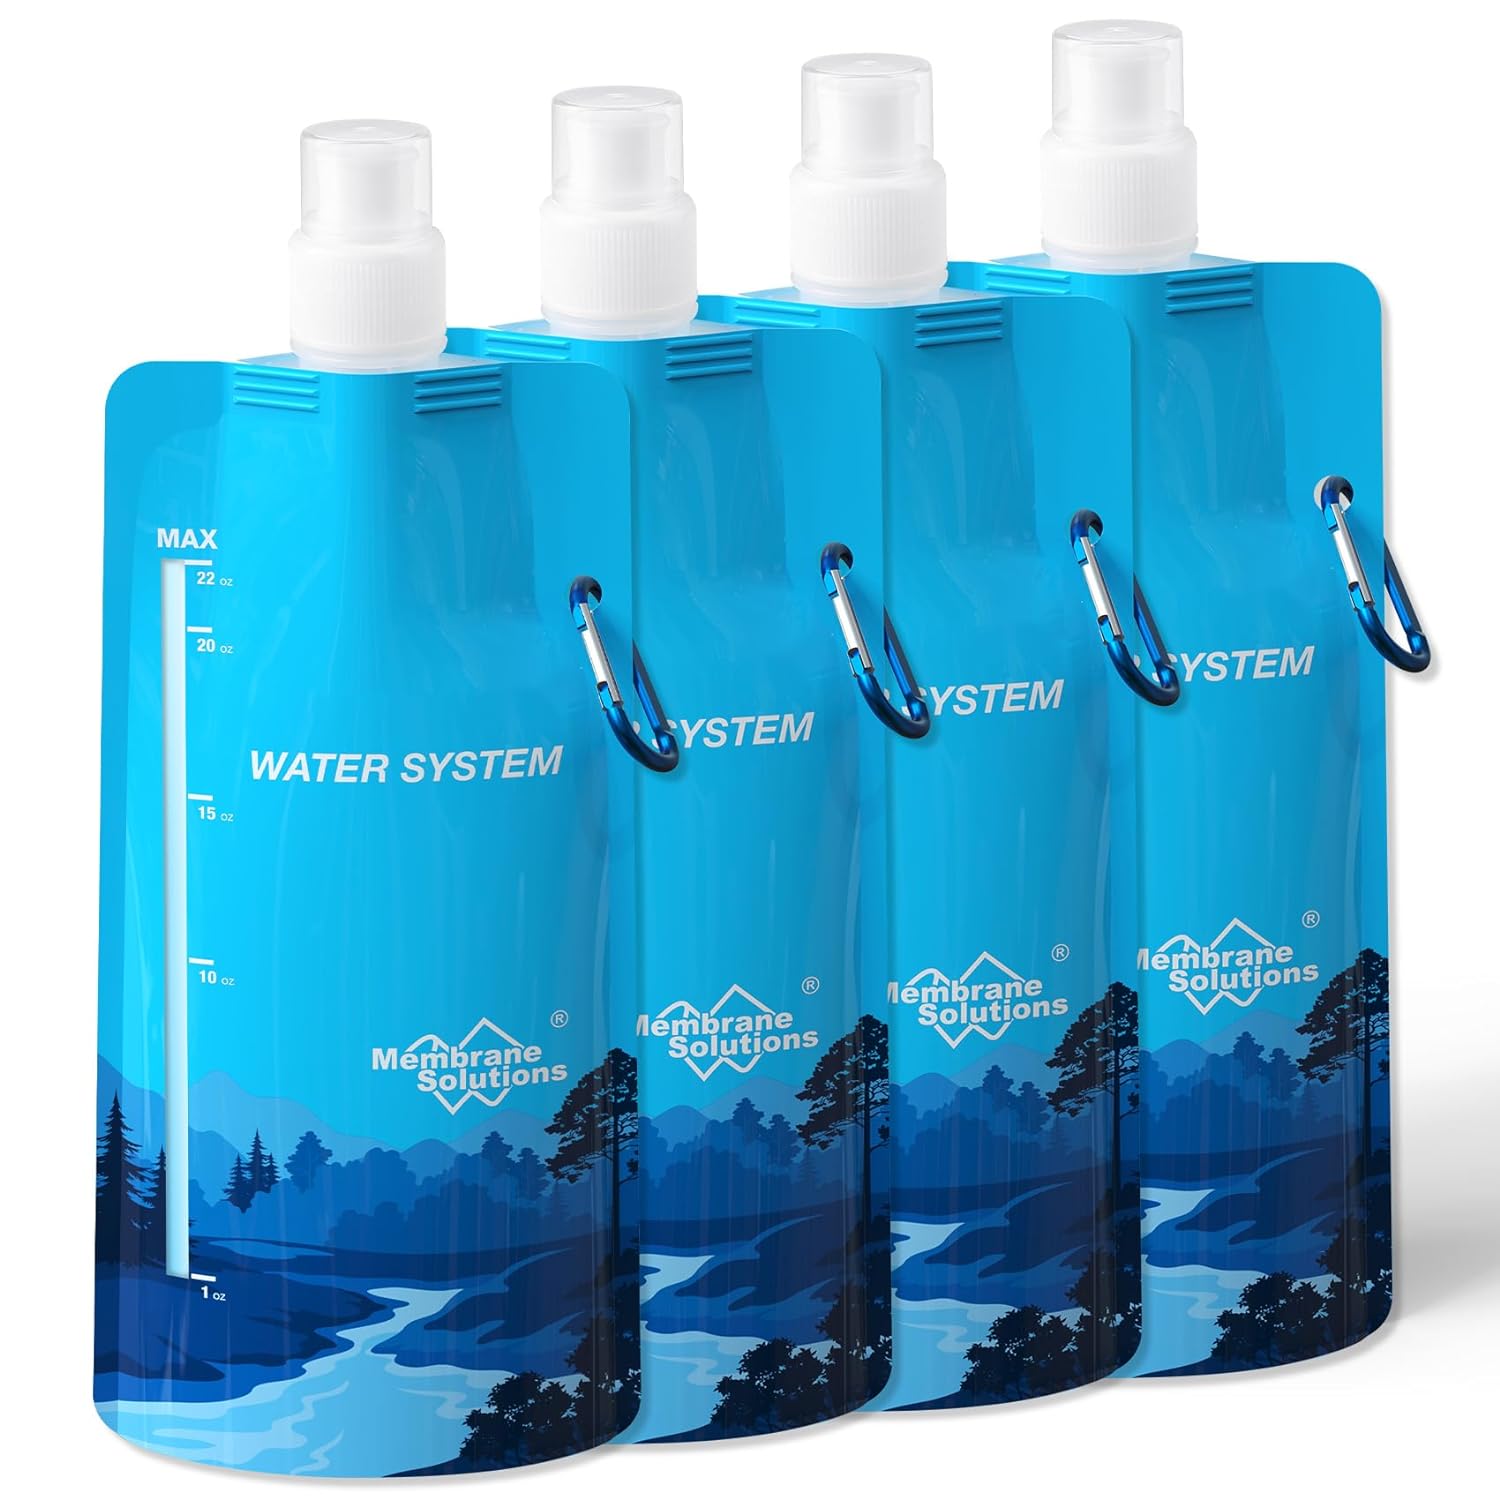 Flexible Collapsible Reusable BLUE Water Bottle Pouch BPA-Free -16